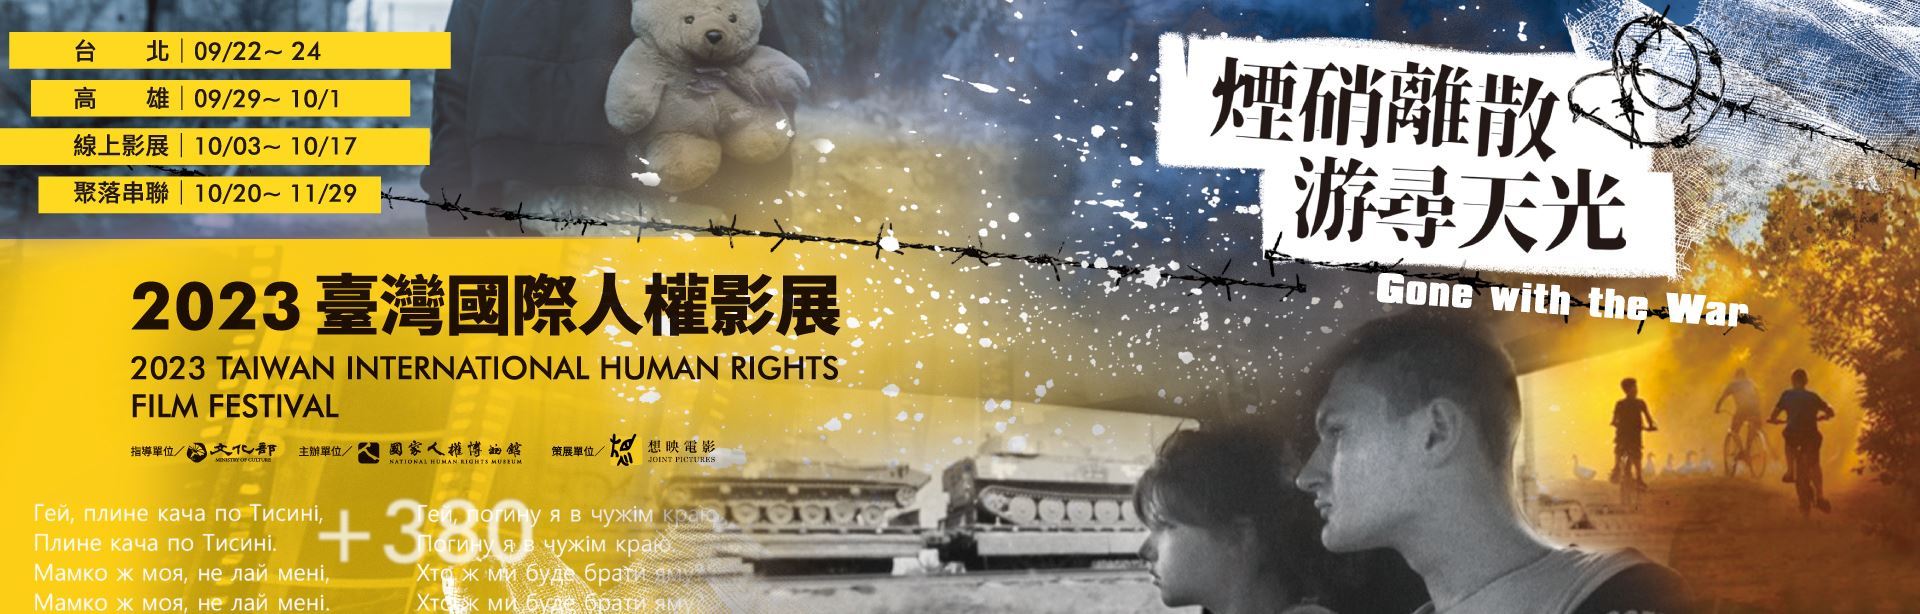 2023 Taiwan International Human Rights Film Festival 